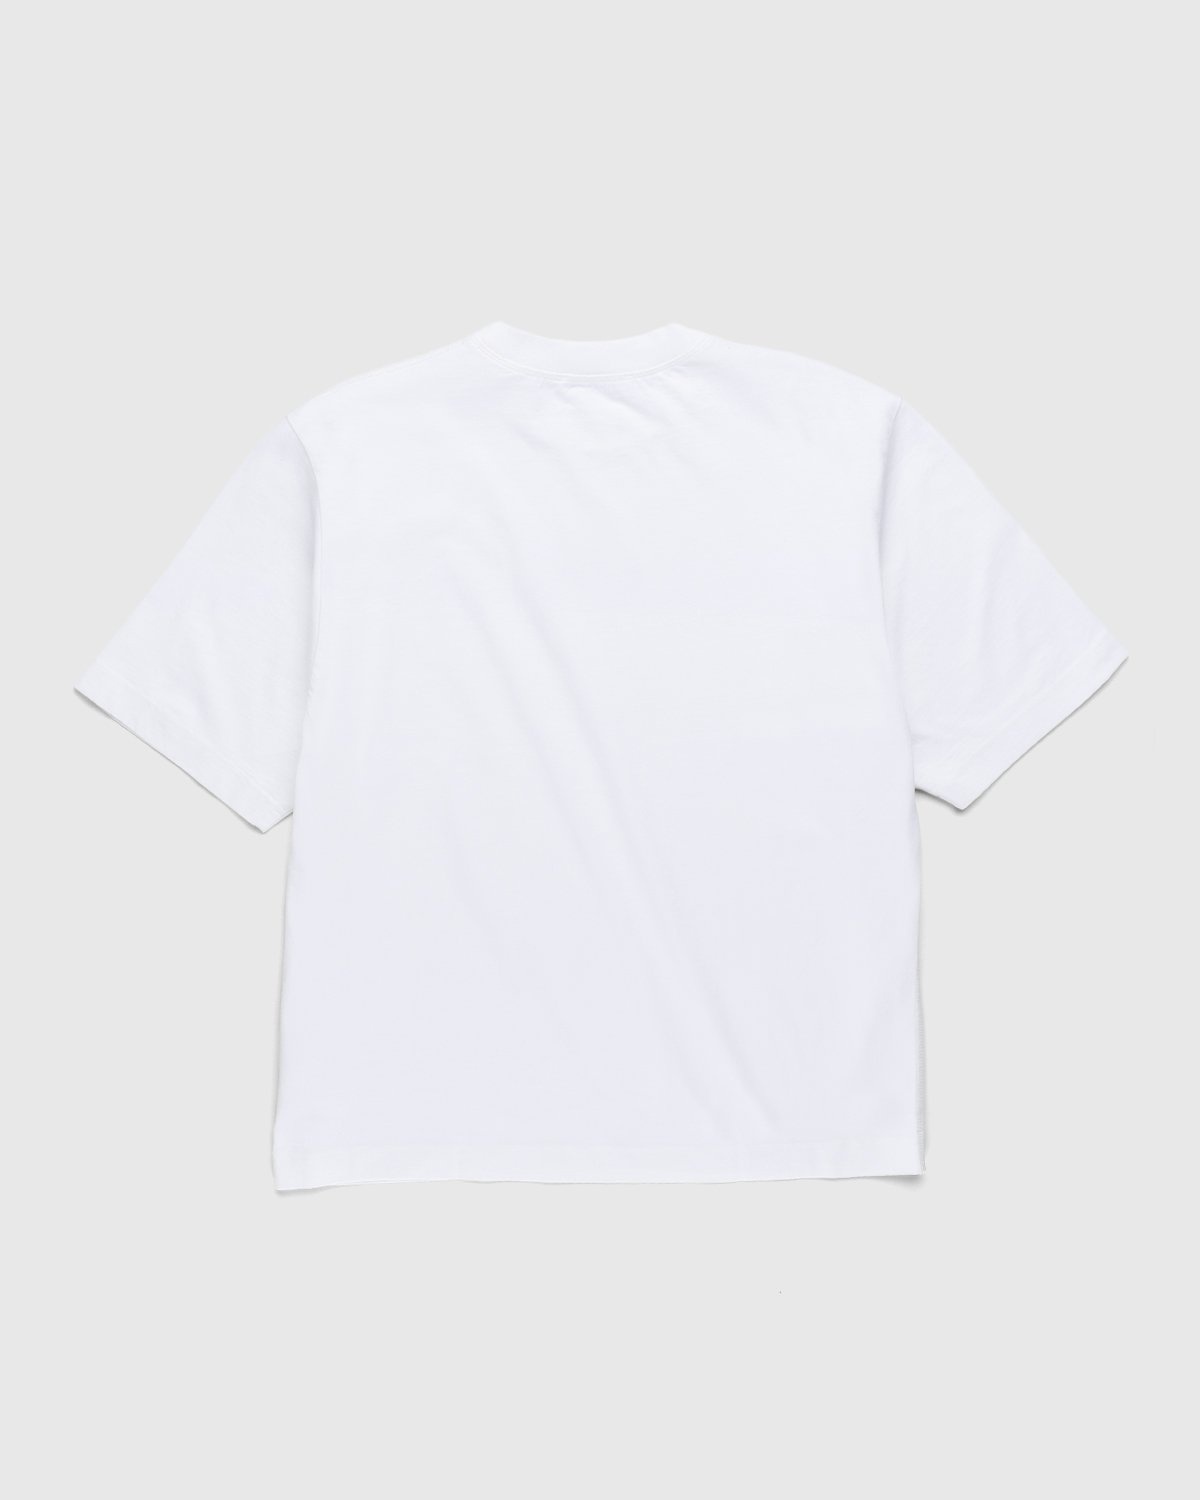 Acne Studios – Logo T-Shirt Optic White - Tops - White - Image 2